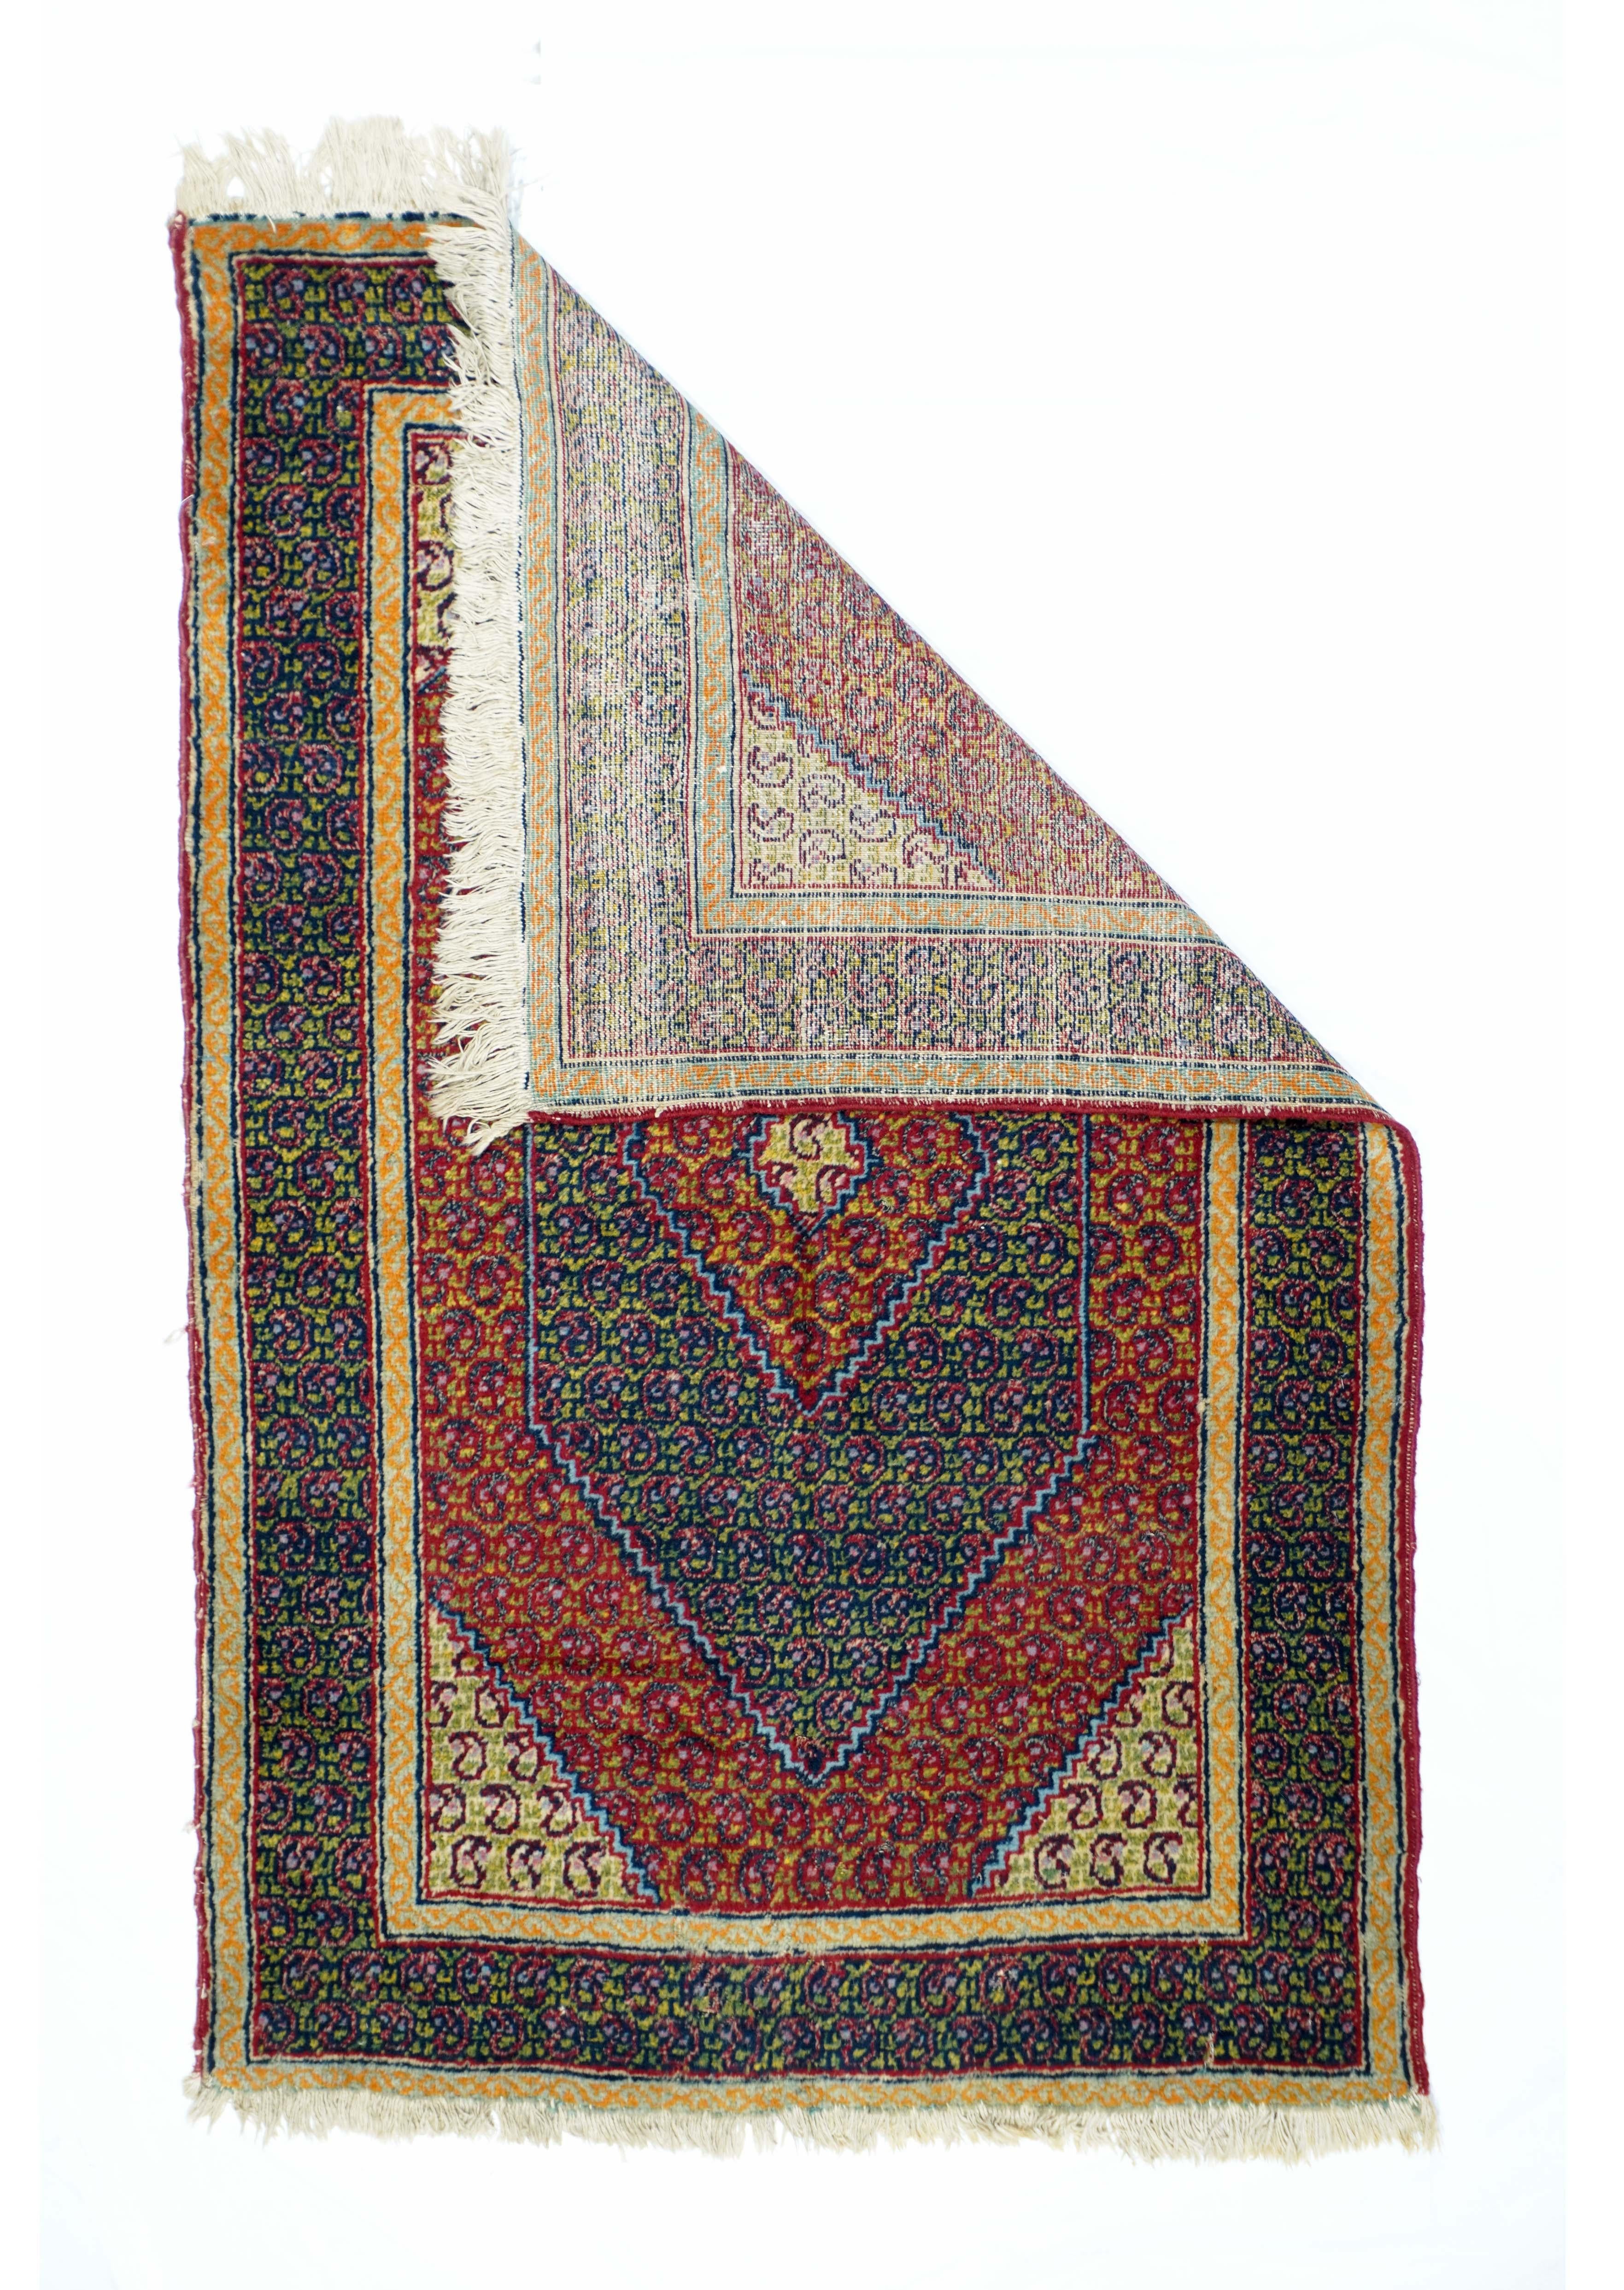 Antique Turkish Tribal rug measures 3' x 4'7''.